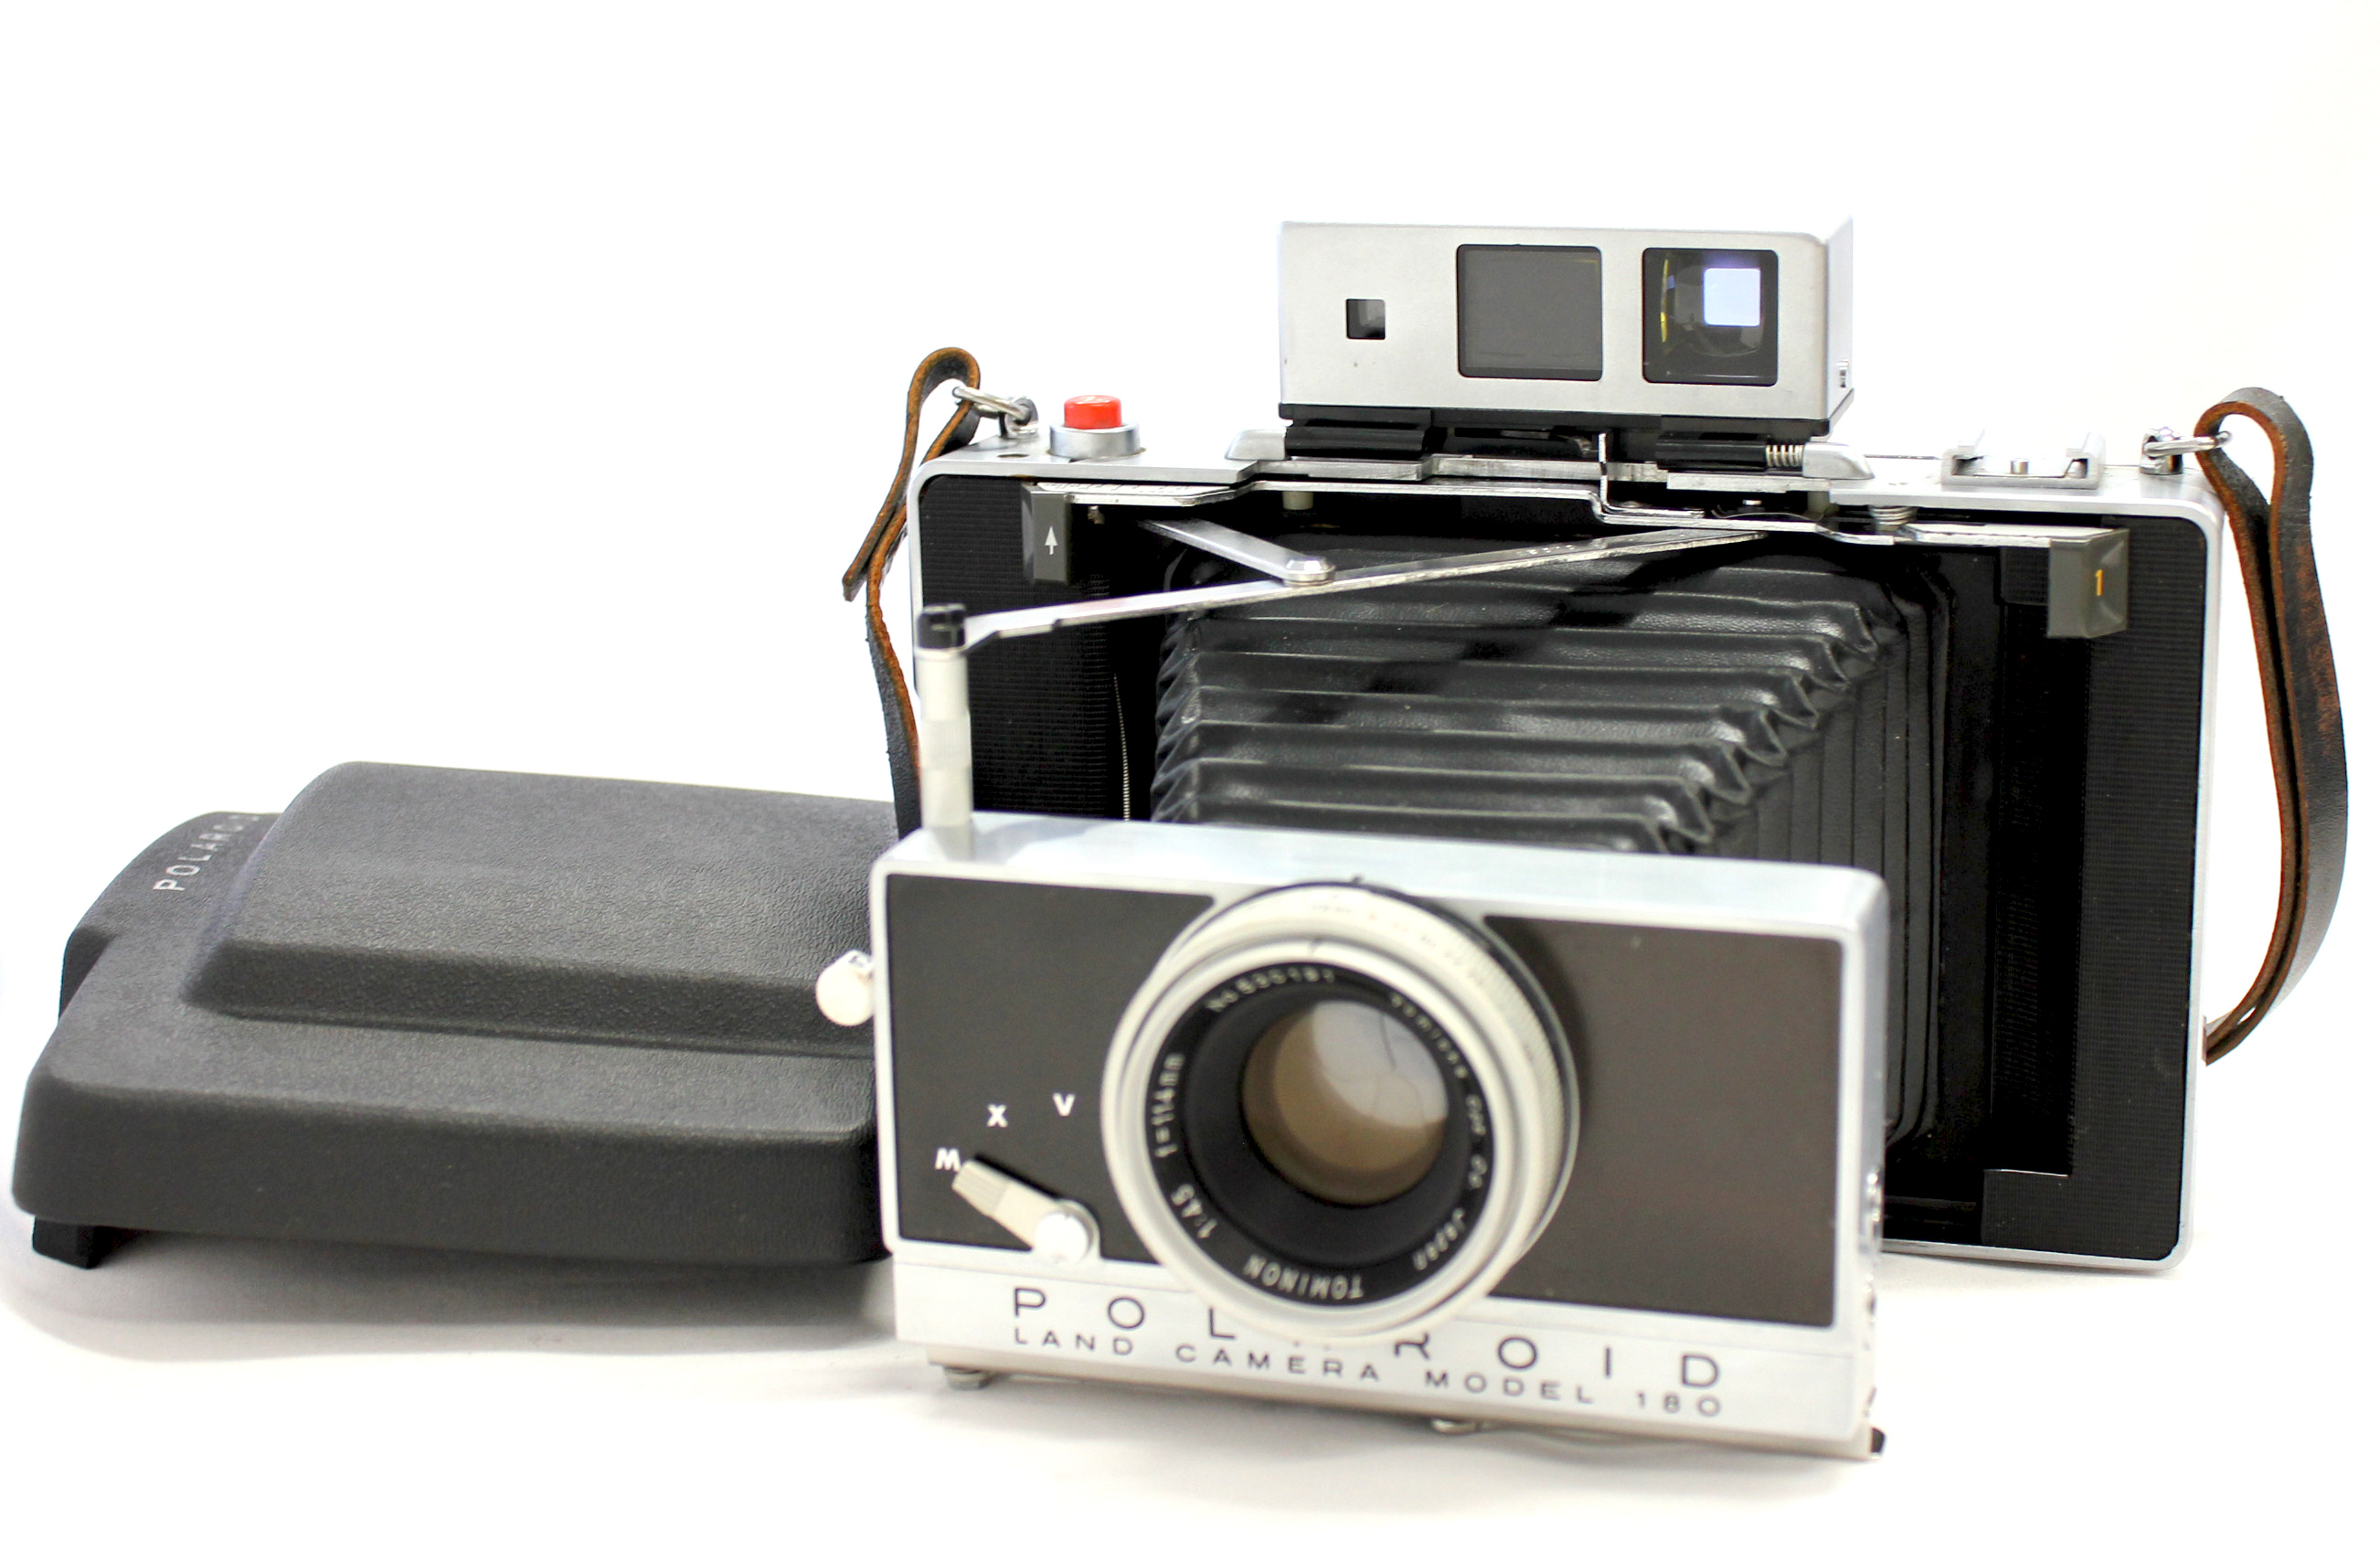  Polaroid Land Camera Model 180 Instant Film Camera w/ Tominon 114mm F/4.5 from Japan Photo 0